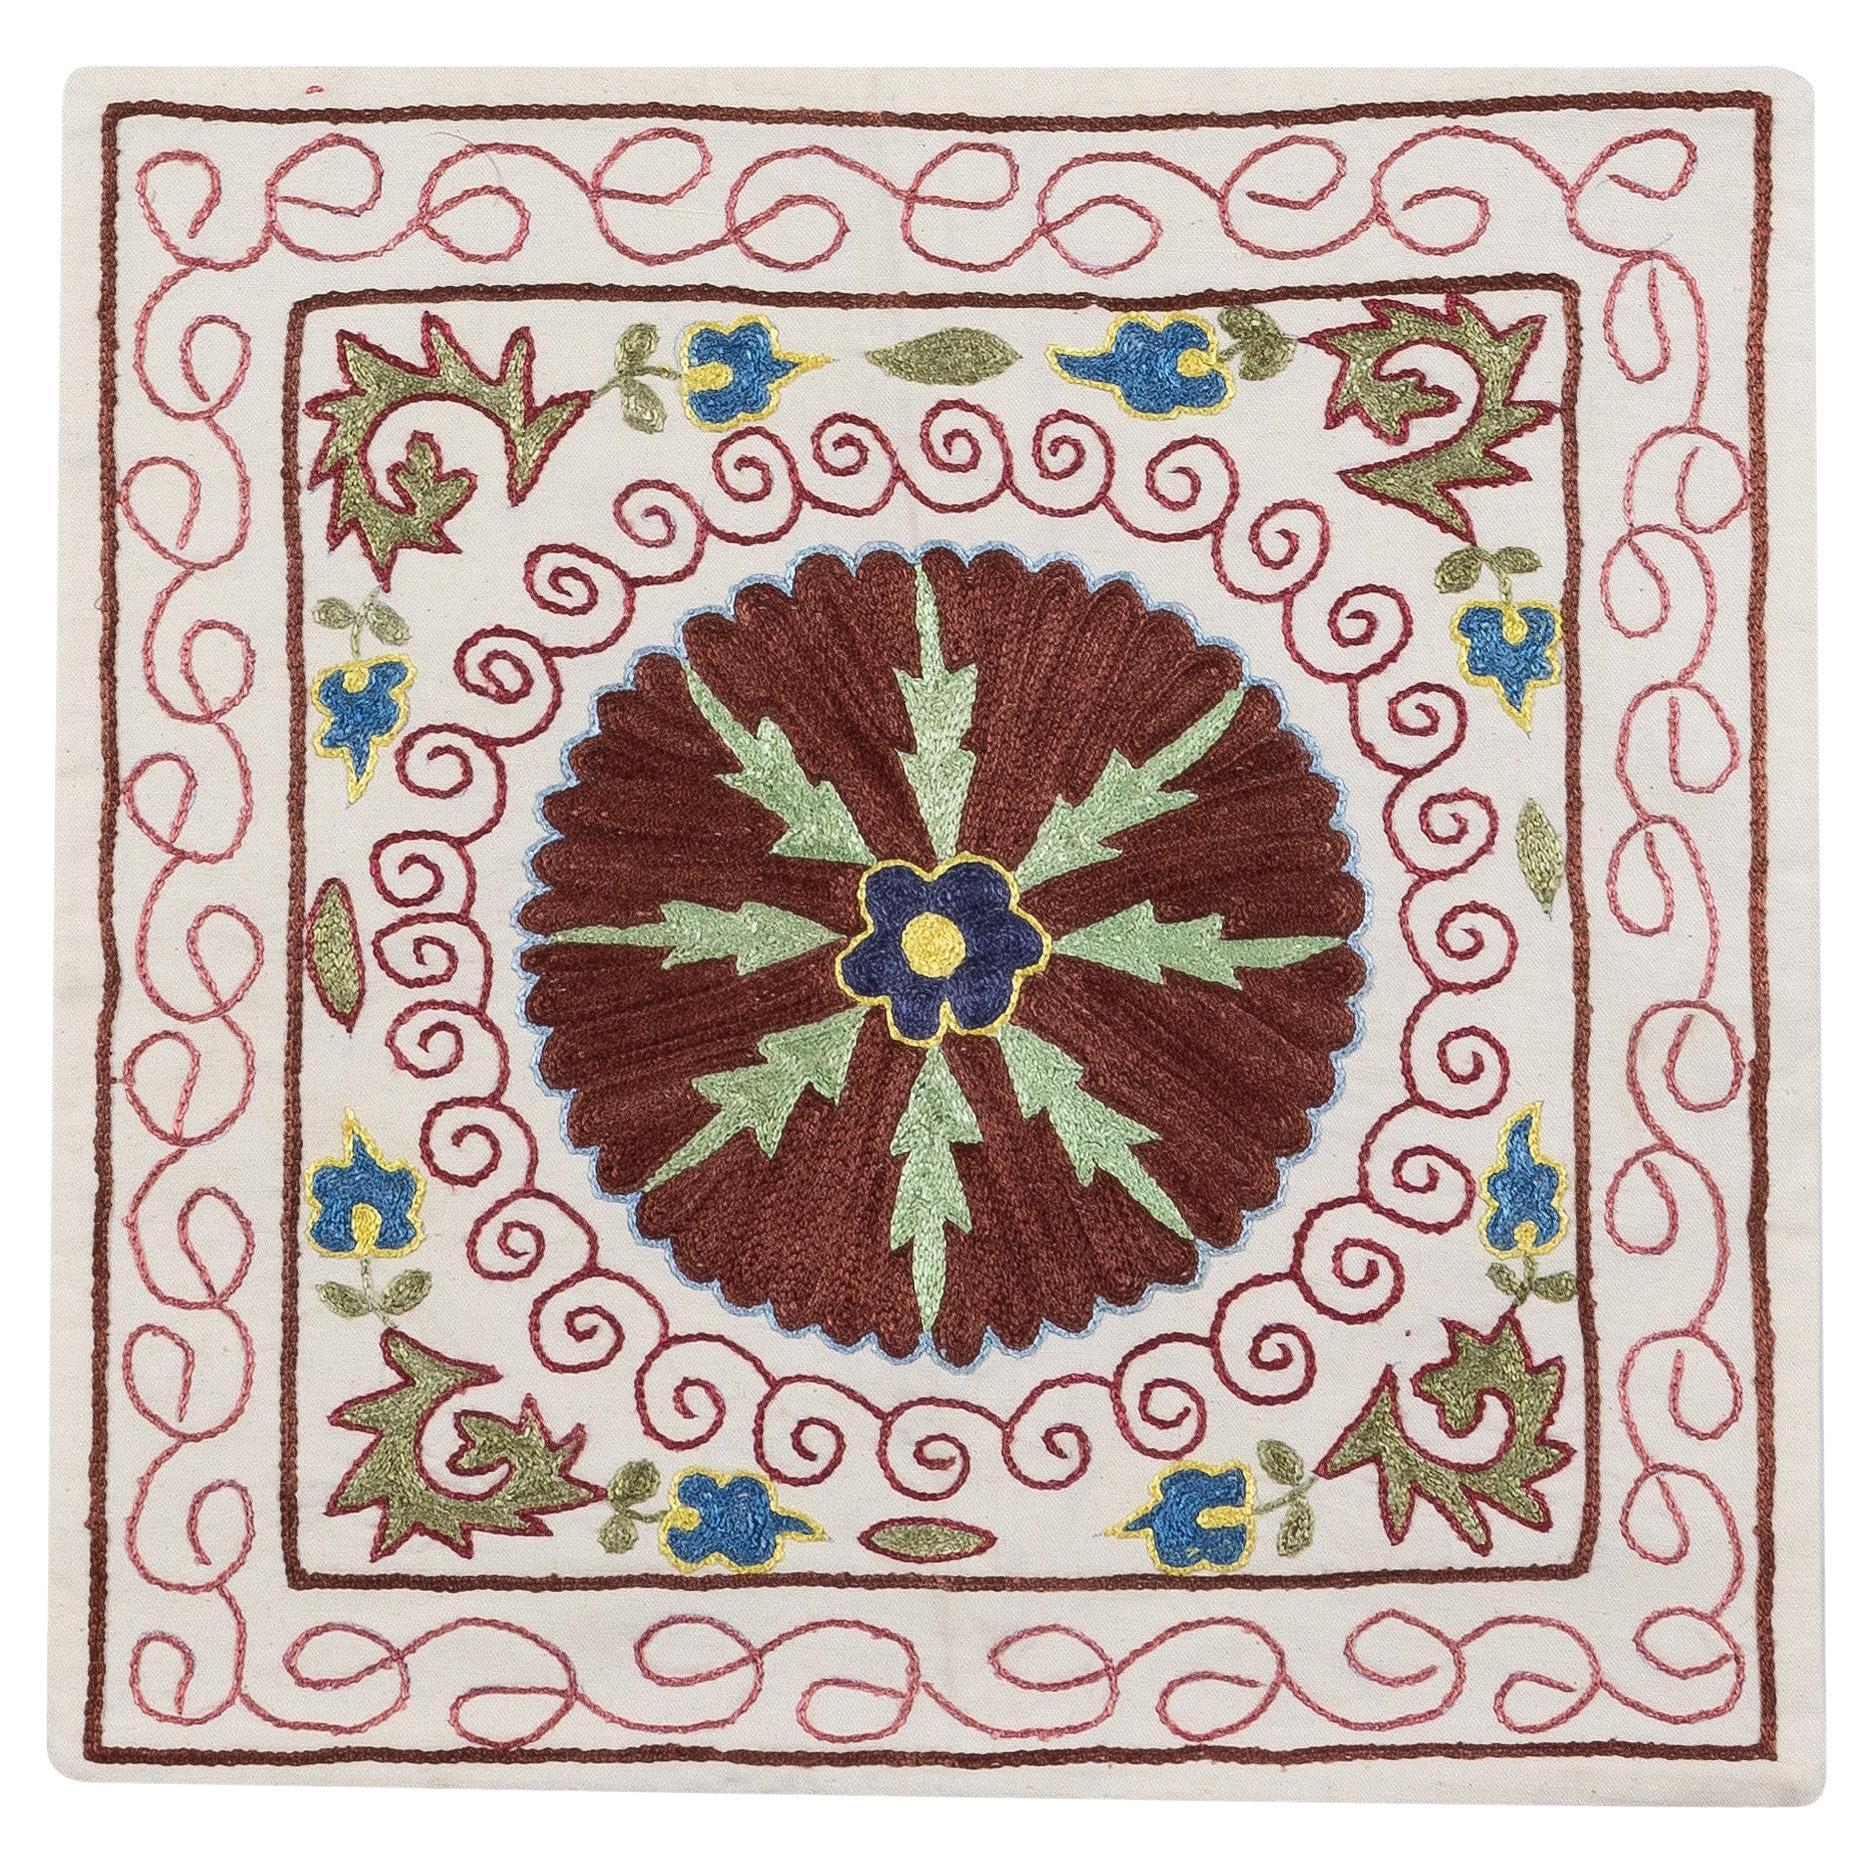 16"x17" Handmade Silk Embroidered Suzani Cushion Cover, New Uzbek Toss Pillow